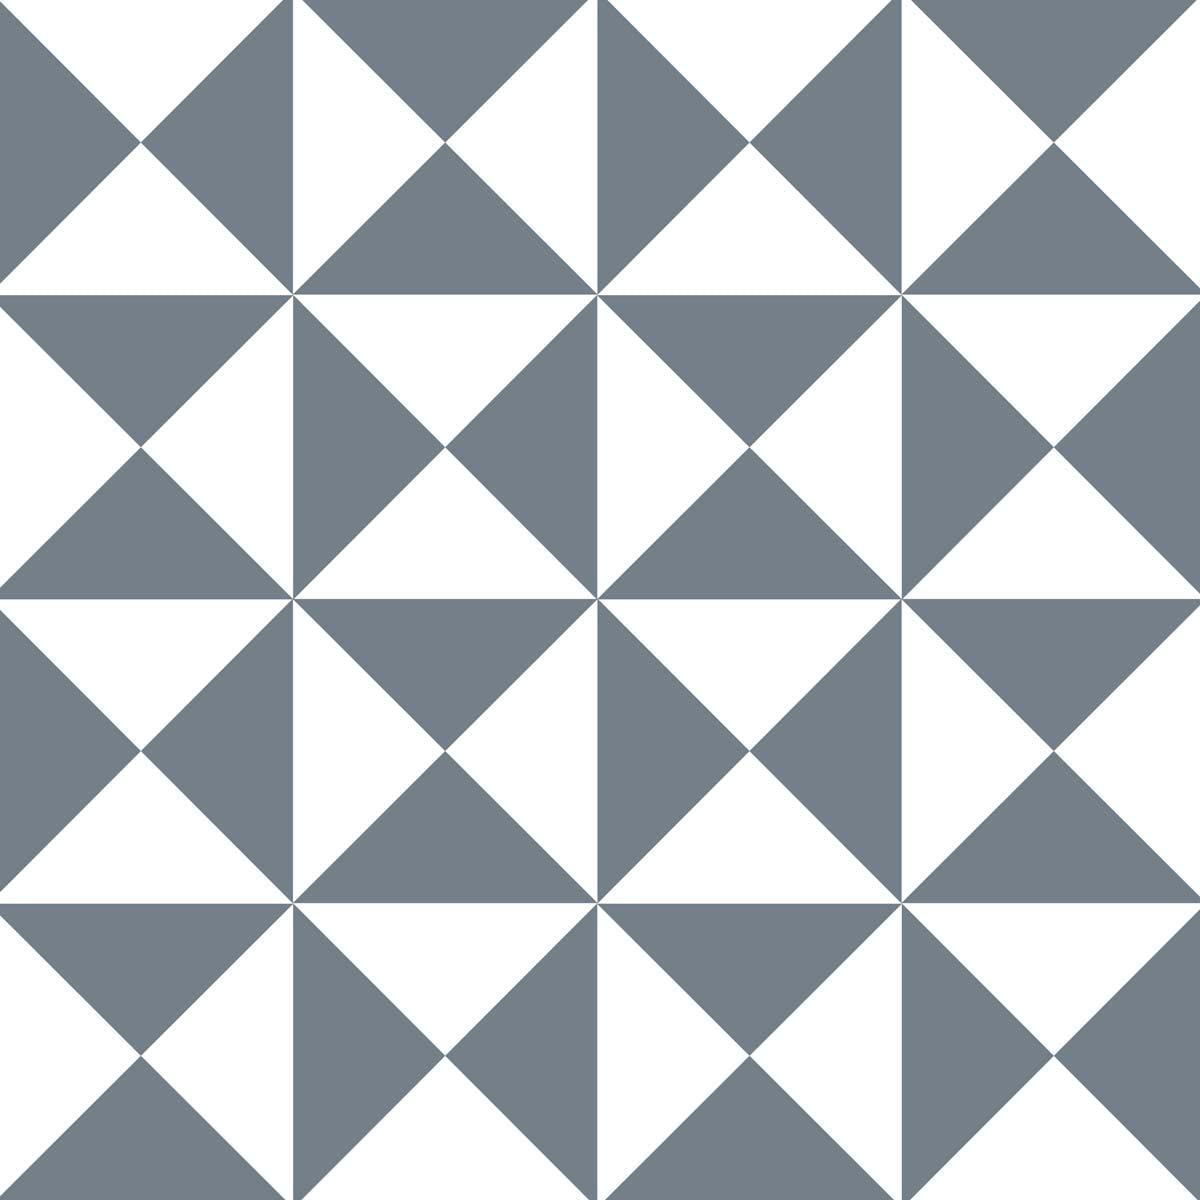 Stickers carrelage 15x15 cm Triangles gris et blanc